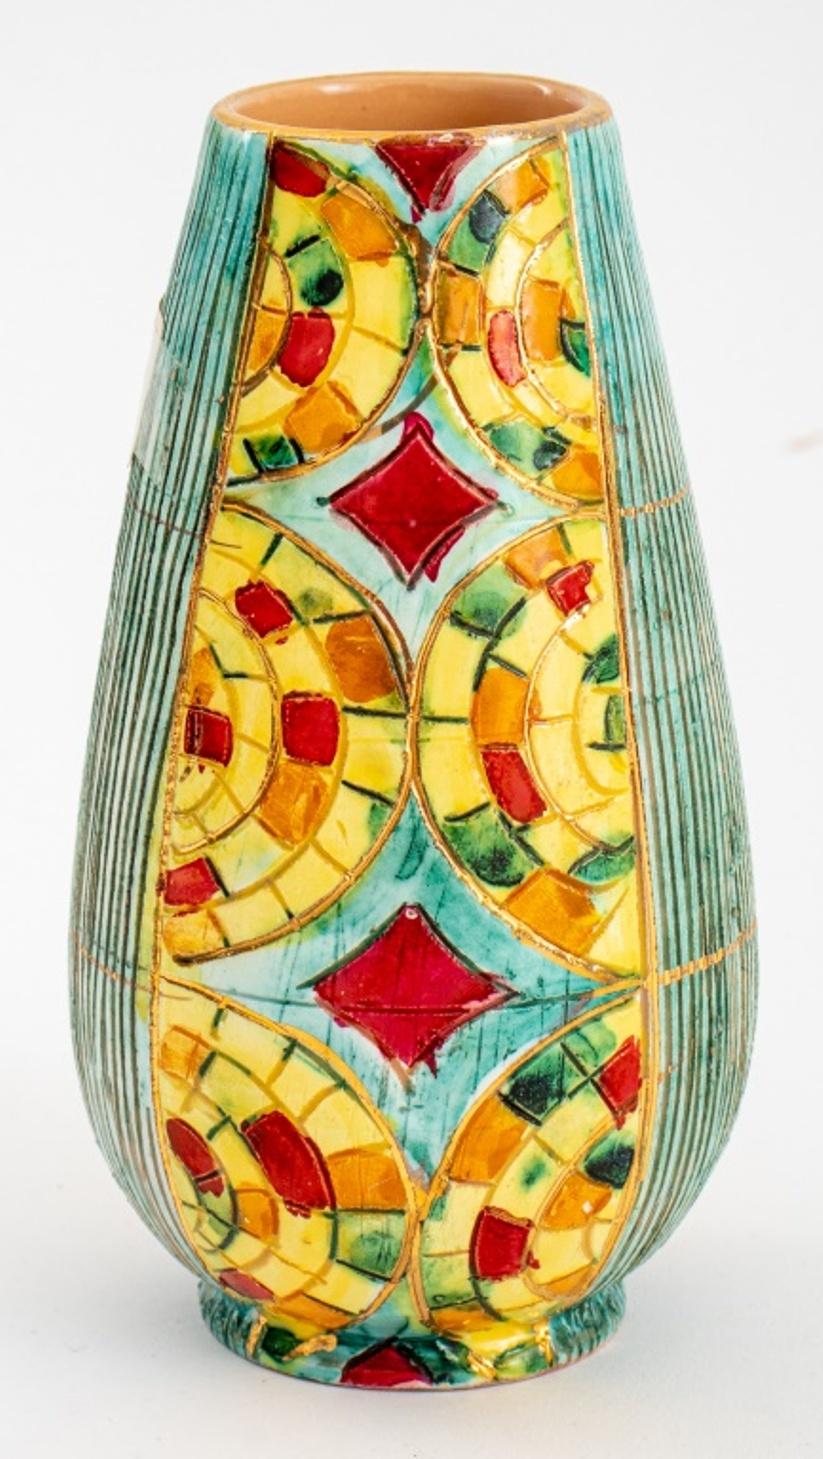 Polychromed Midcentury Italian Ceramic Vase, circa 1960s For Sale